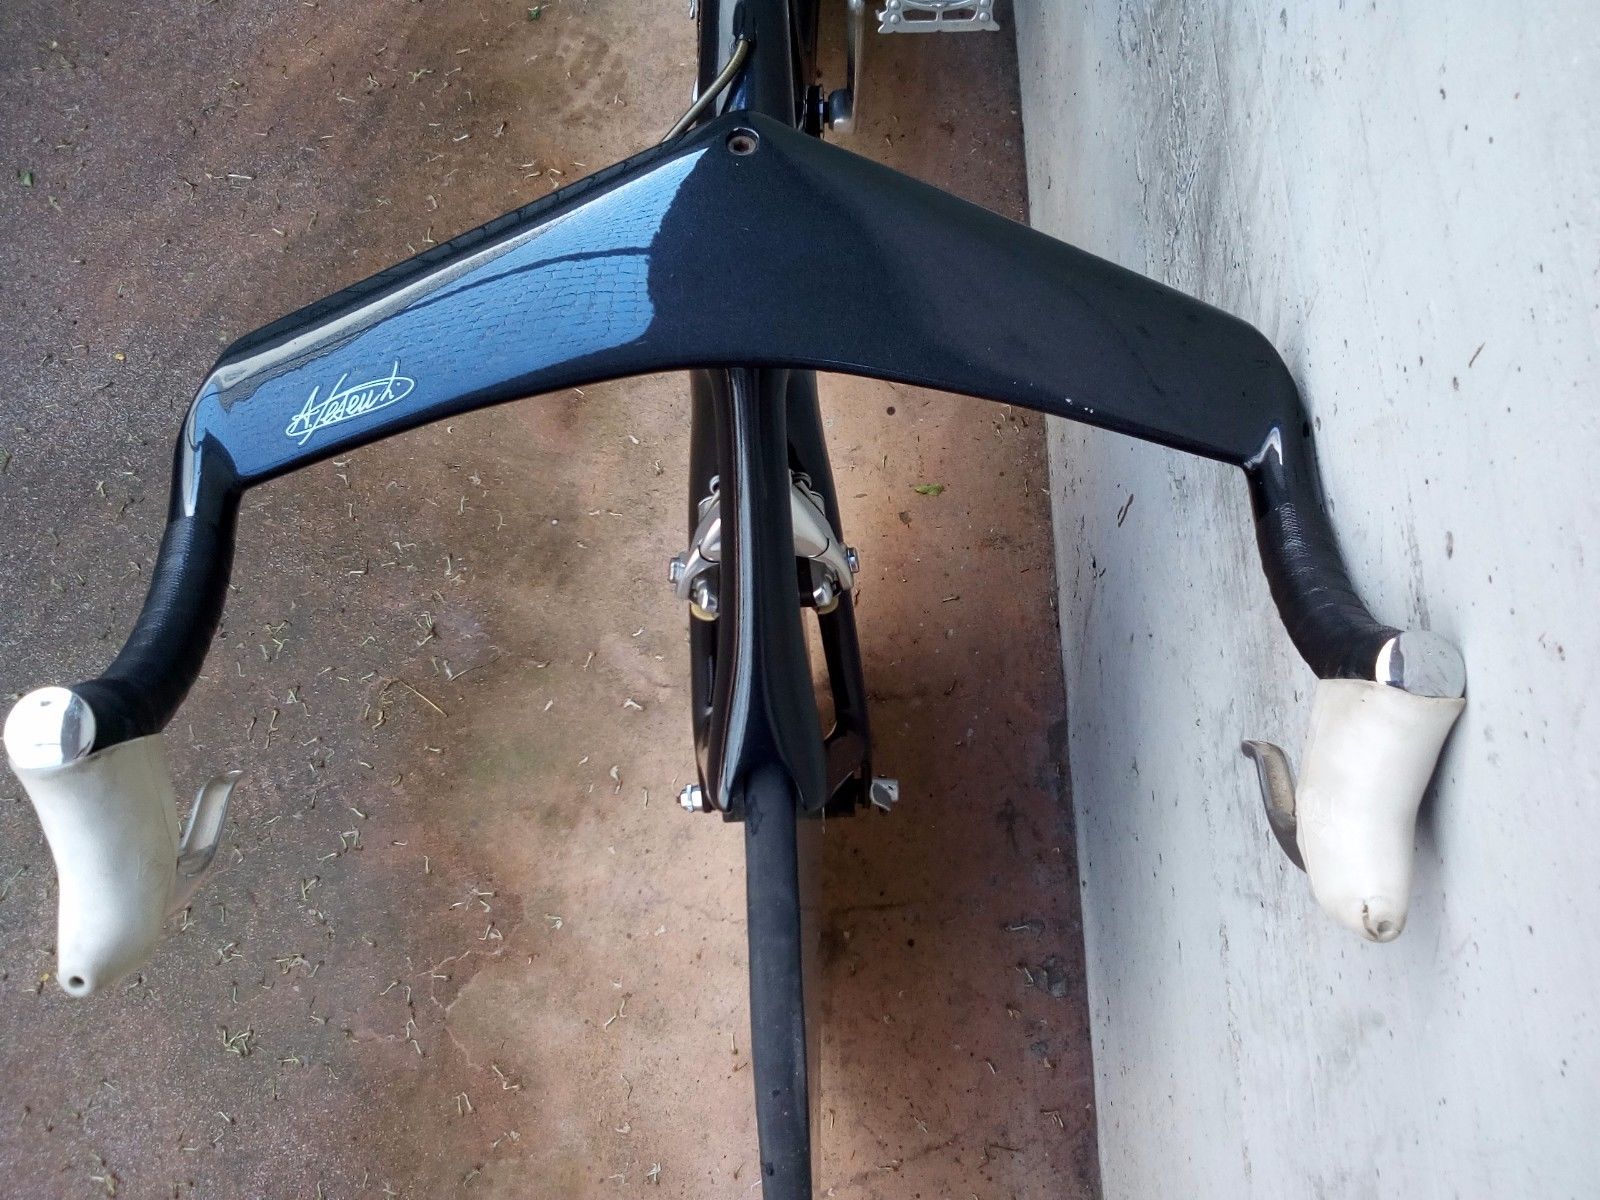 Pisenti Modular Uno Bike with signed handlebars